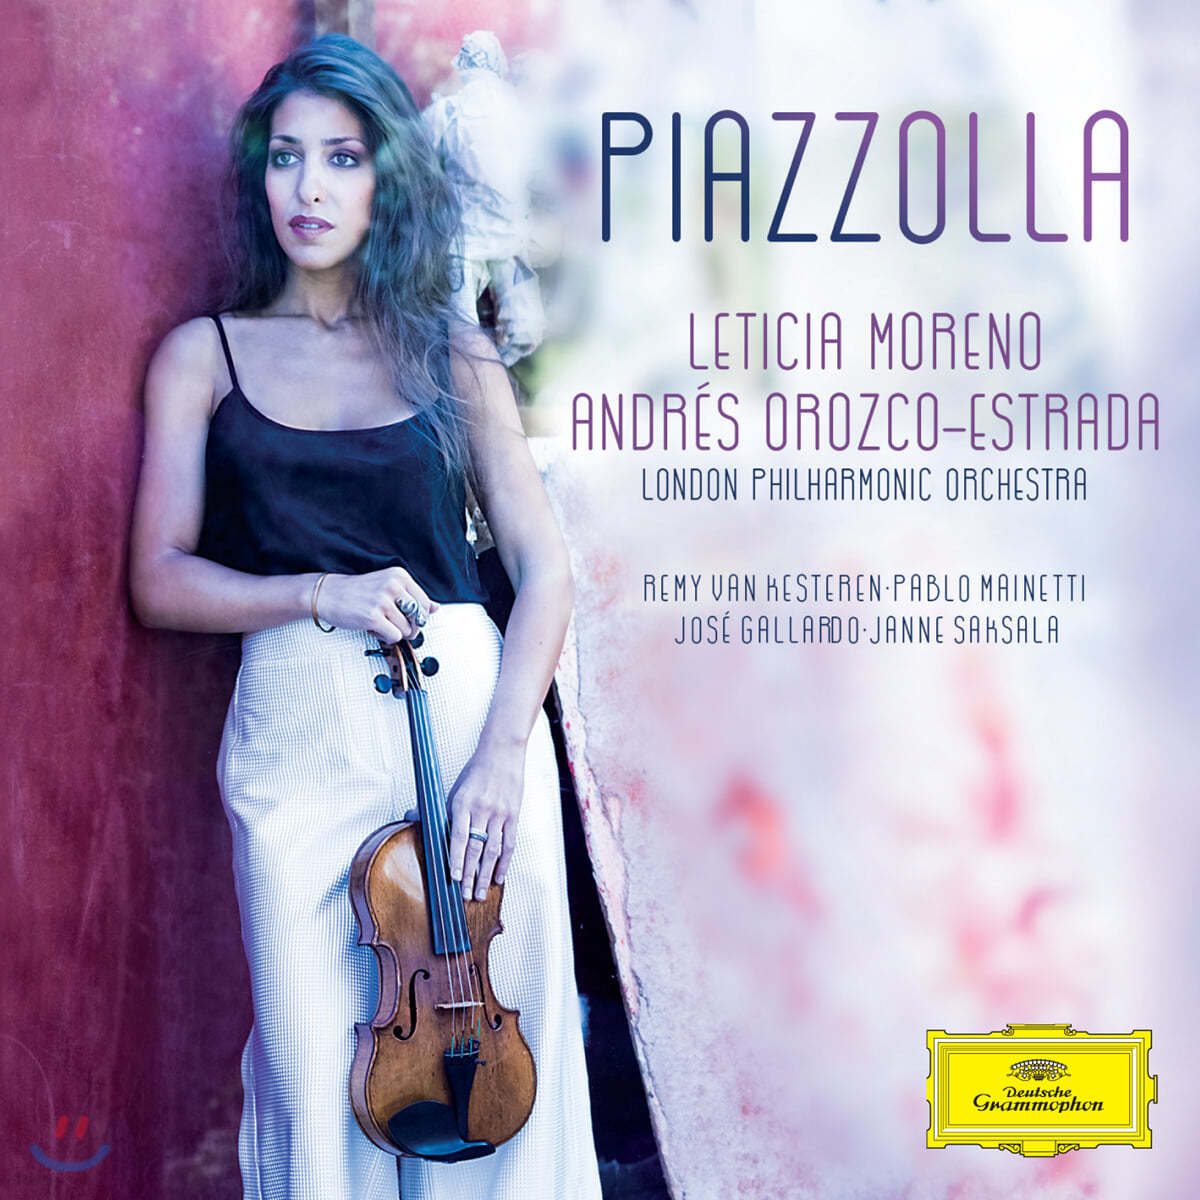 Leticia Moreno 바이올린으로 연주하는 피아졸라 유명 작품집 (Piazzolla)